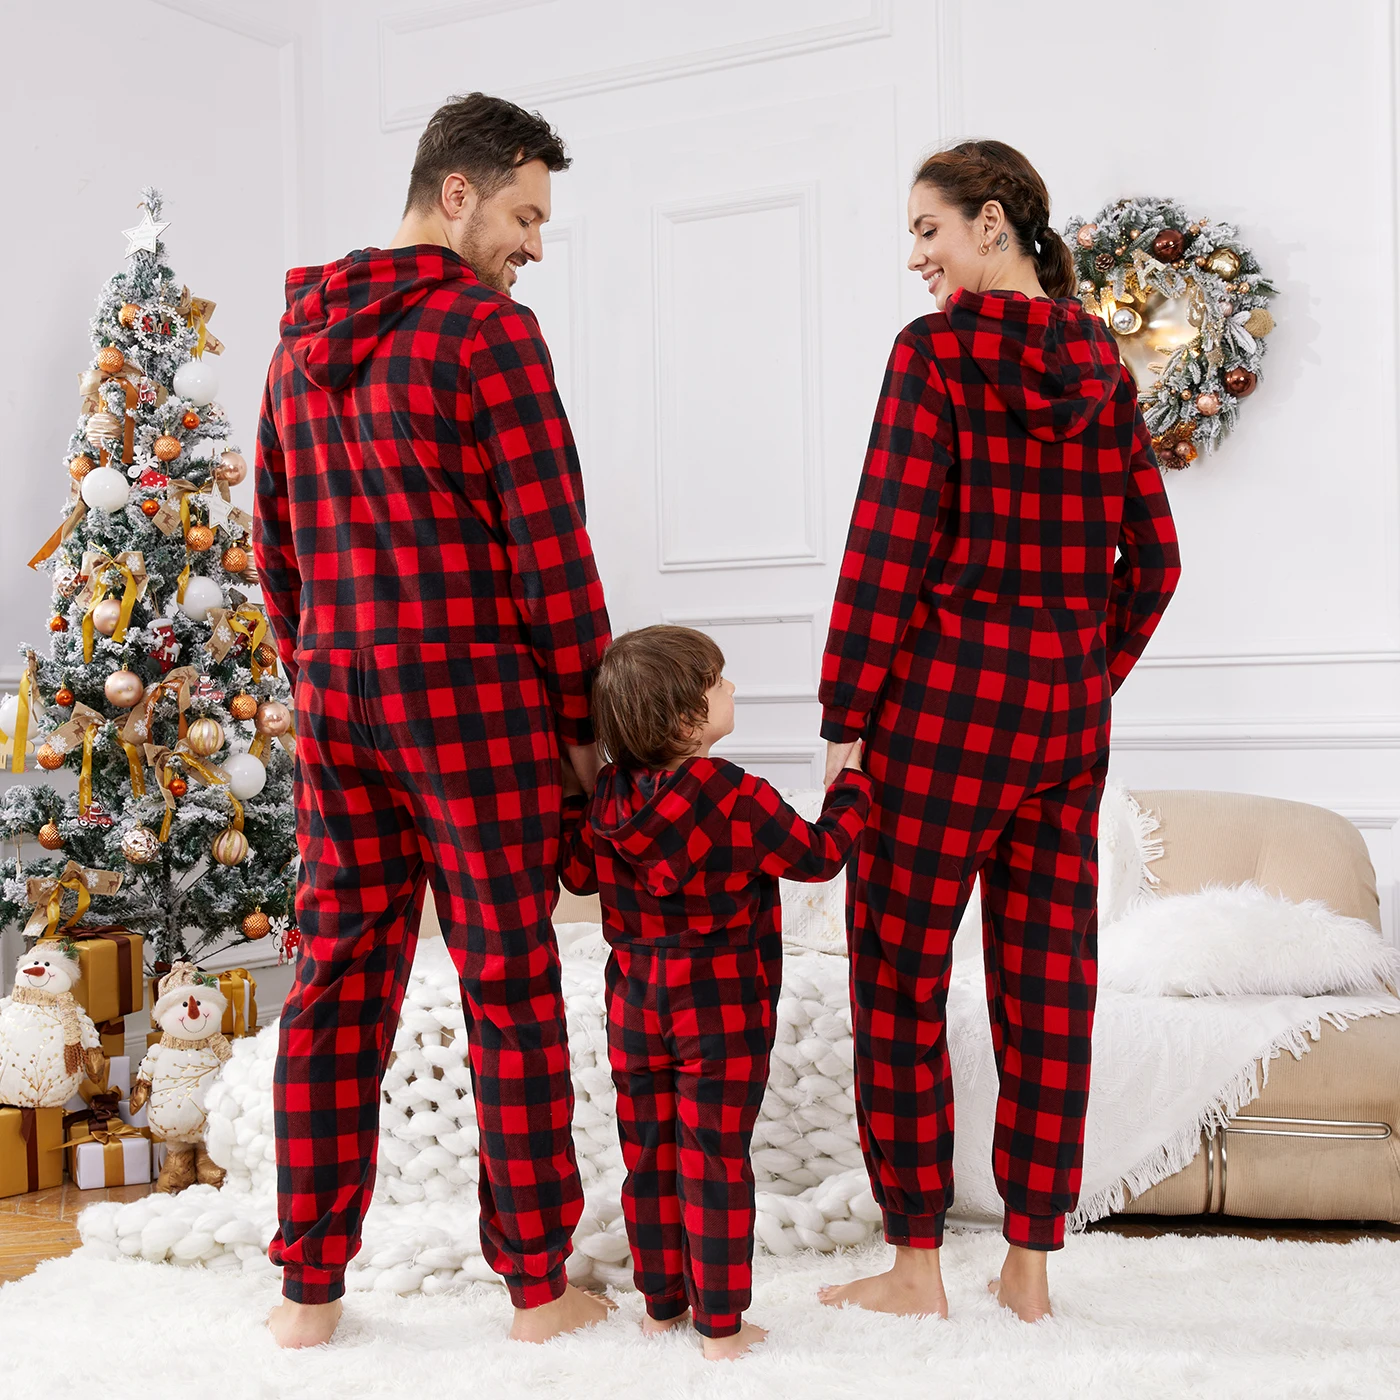 PatPat-Natal Família Combinando Pijama Xadrez Vermelho, Encapuzado,